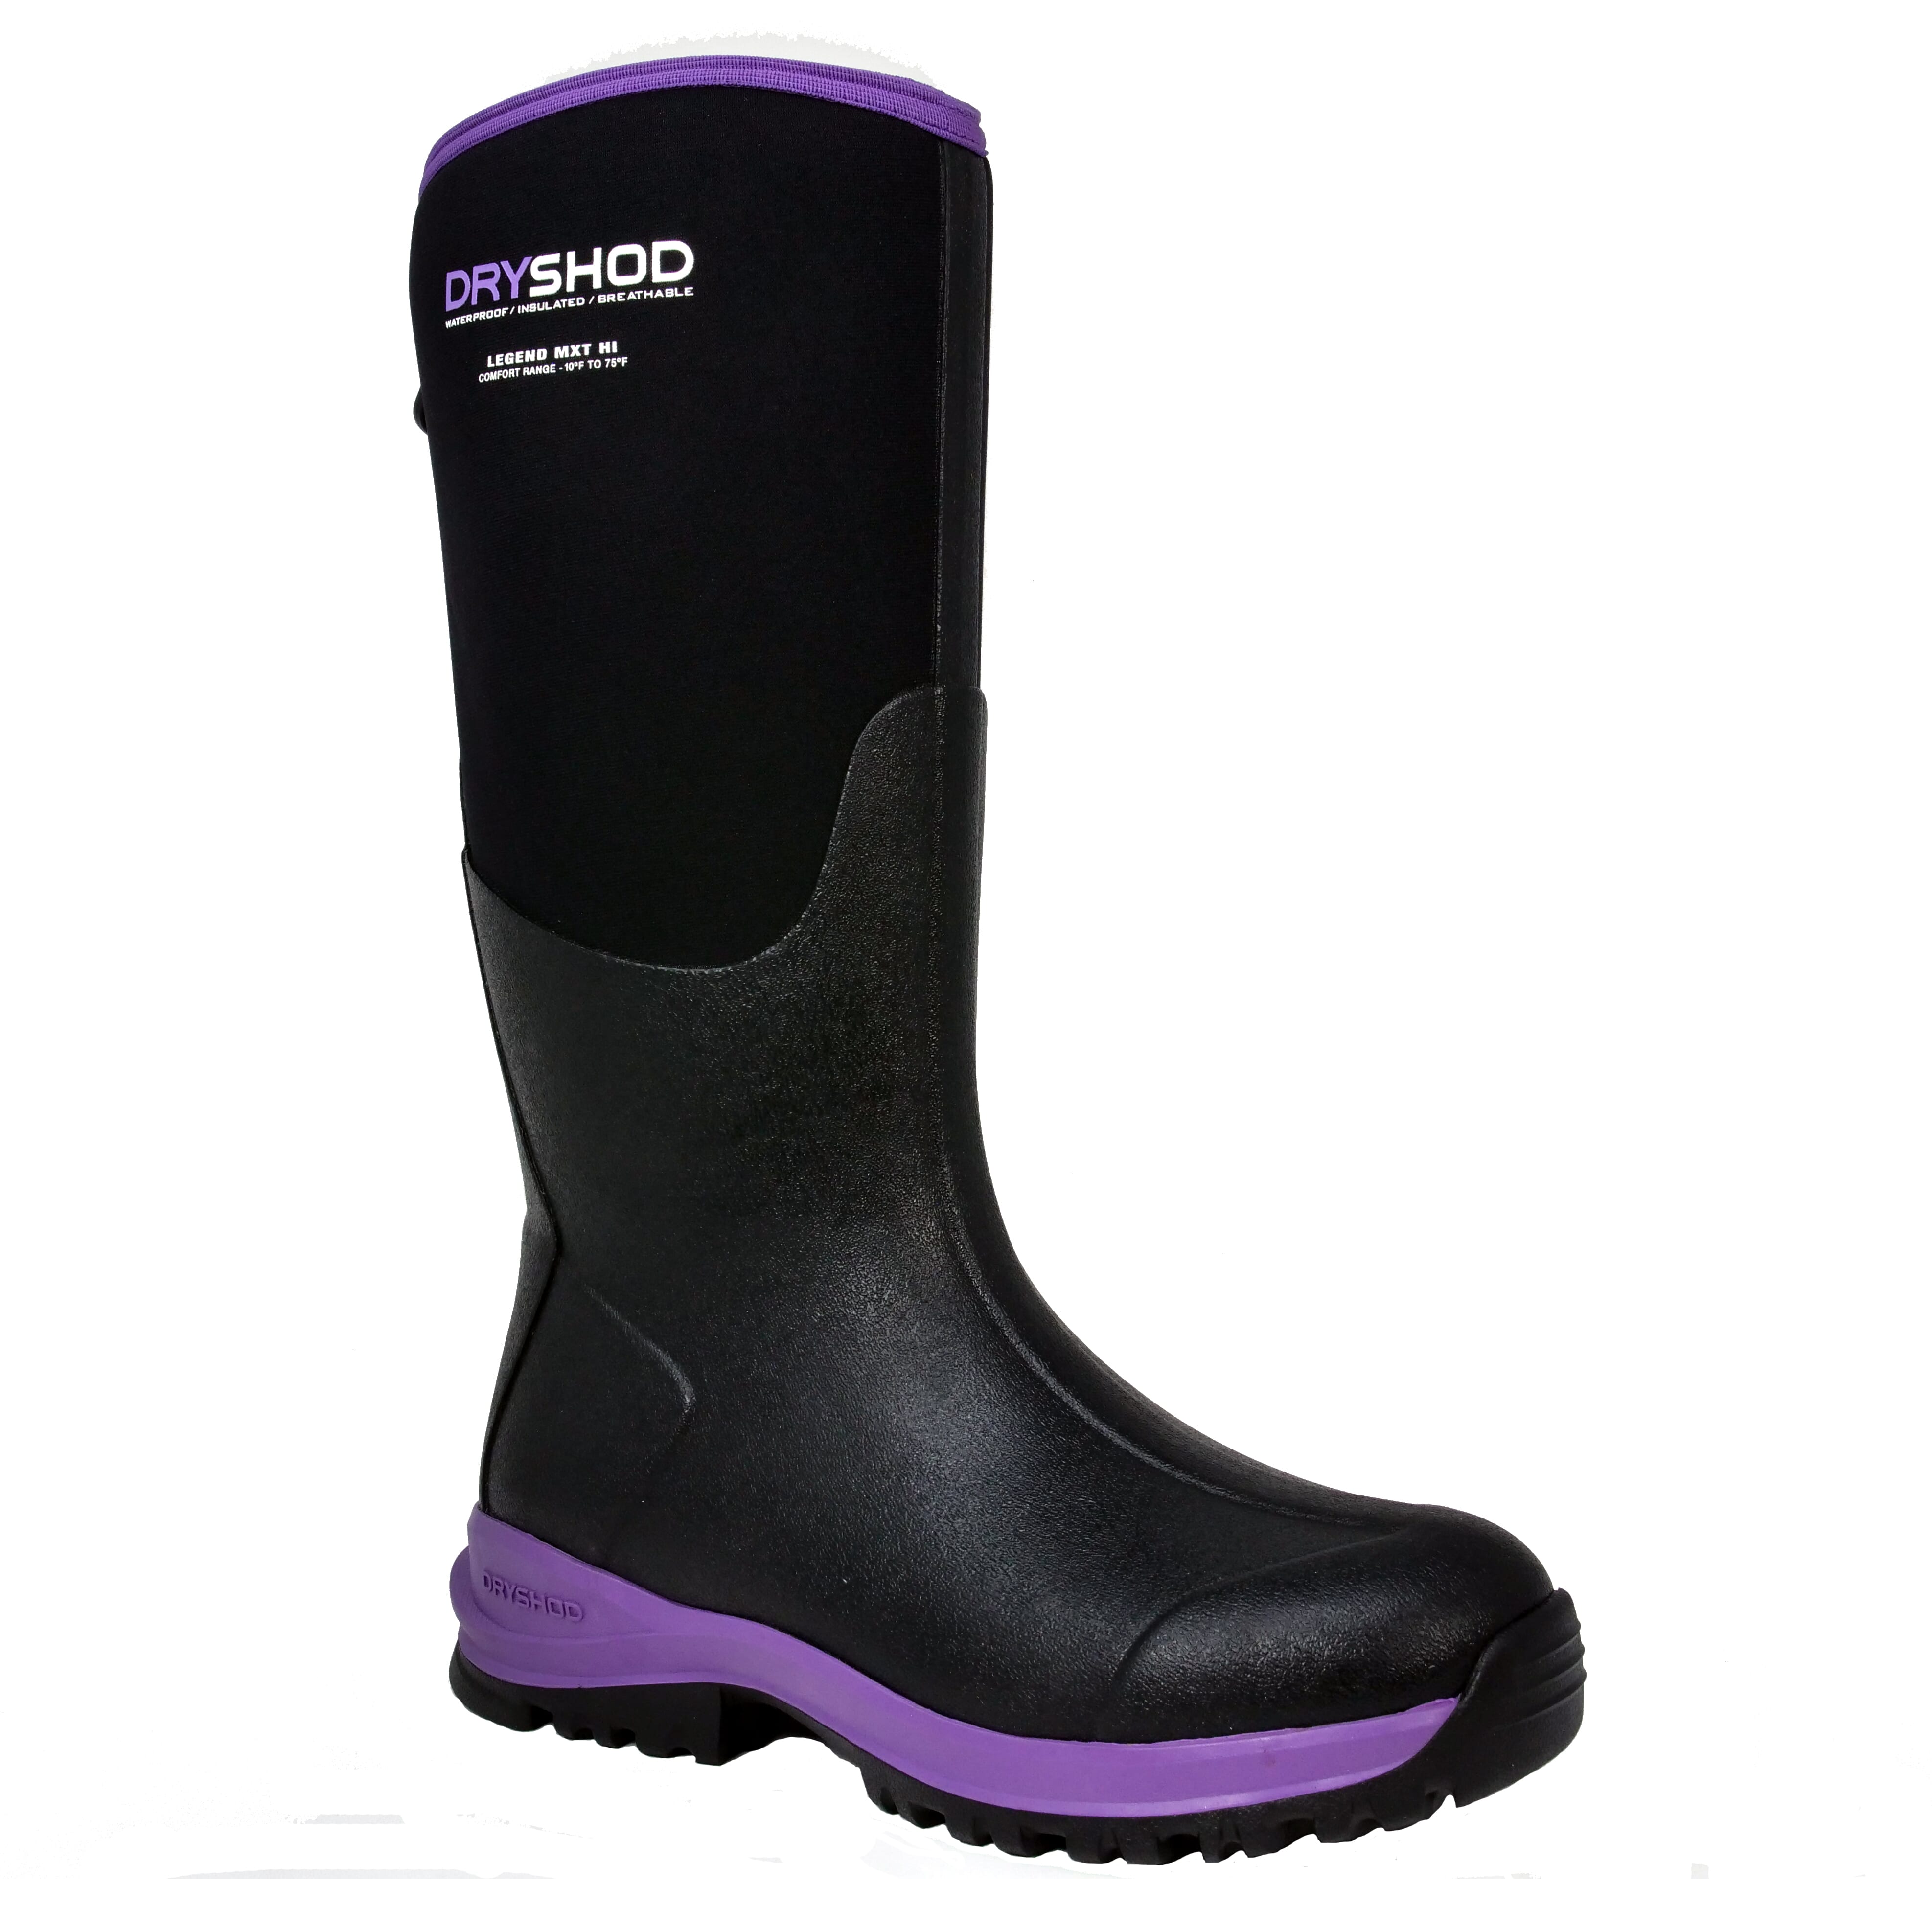 Dryshod Legend MXT Hi Black/Purple Boots LGX-WH-BKPP-W